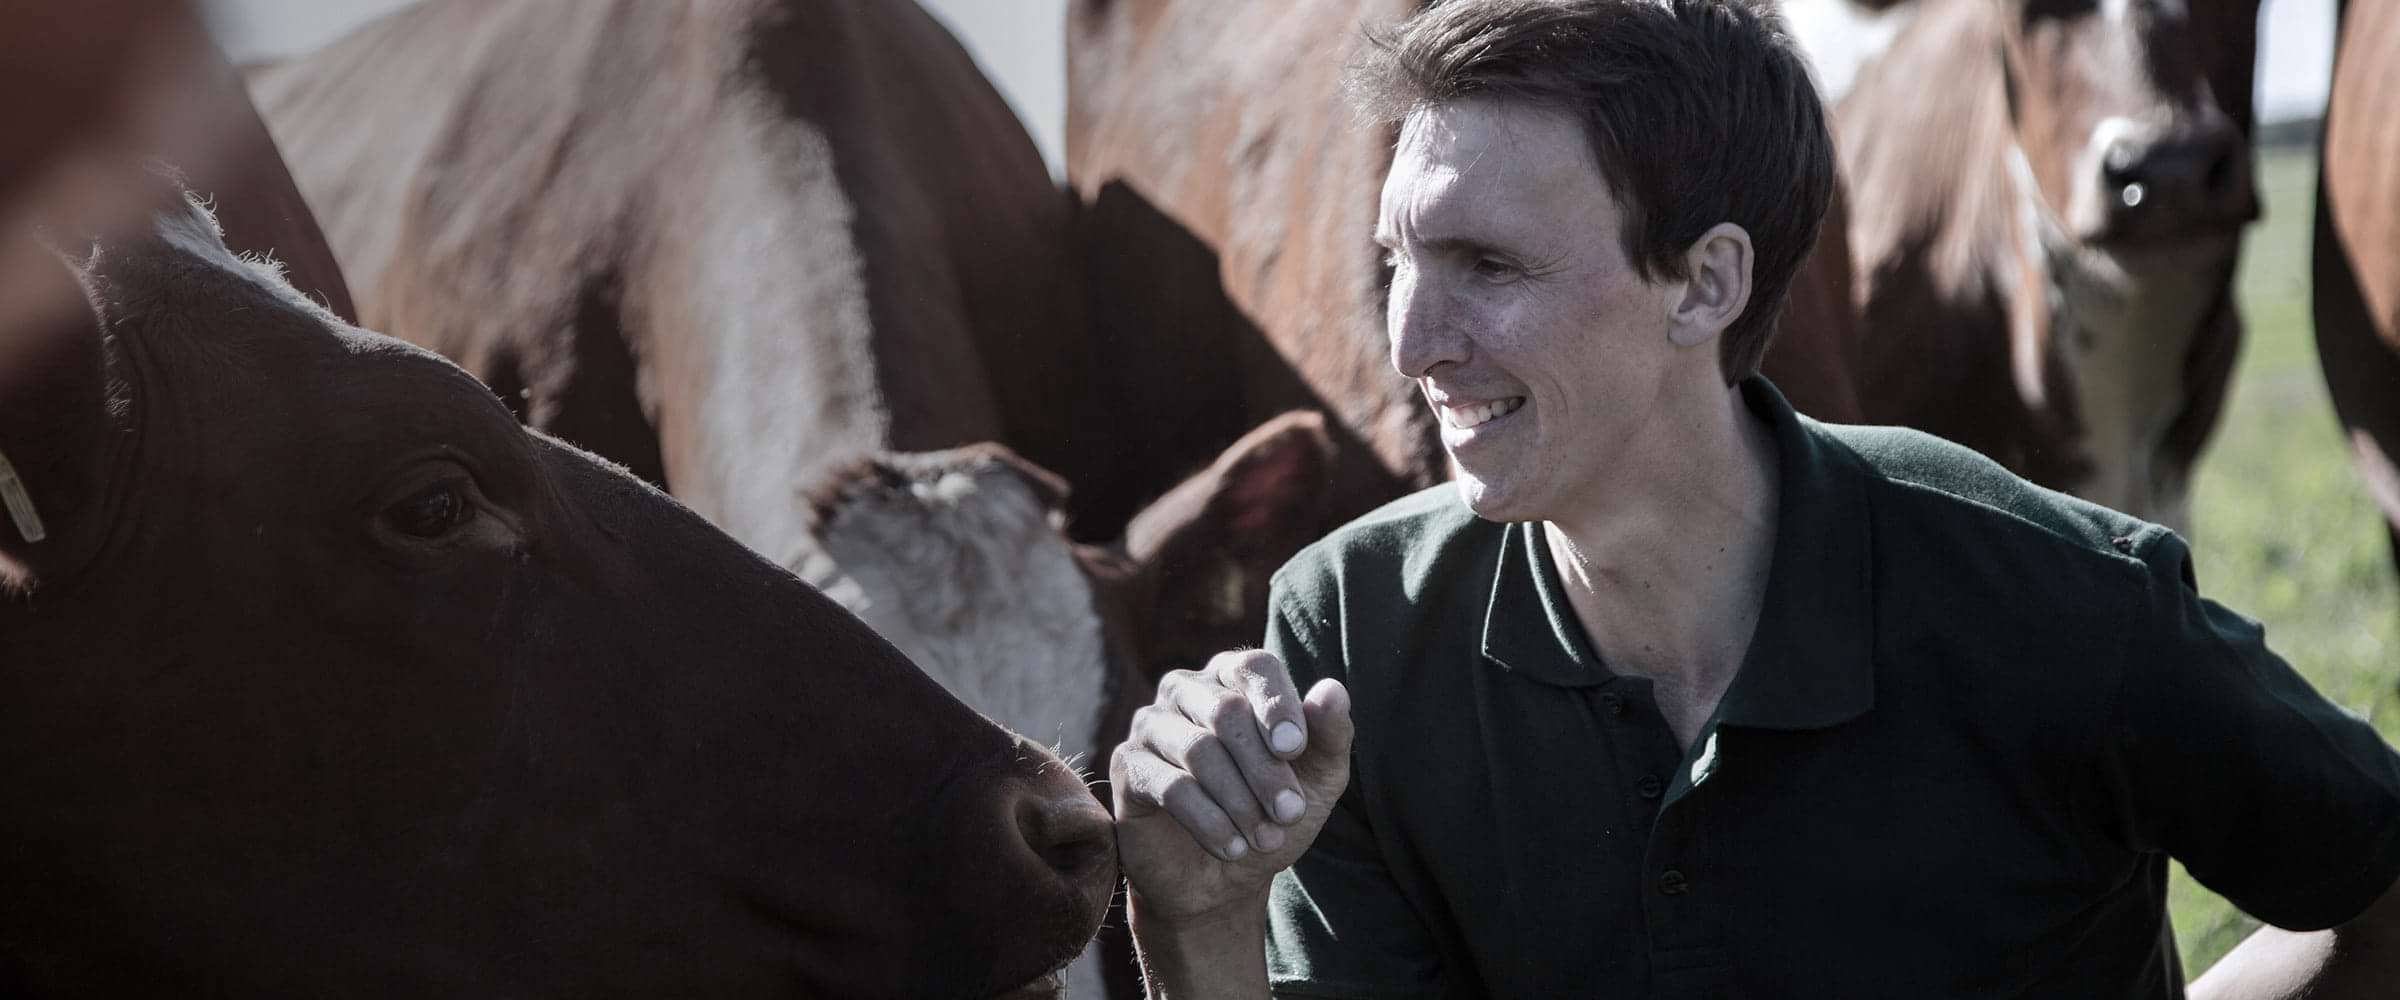 A farmer with cows